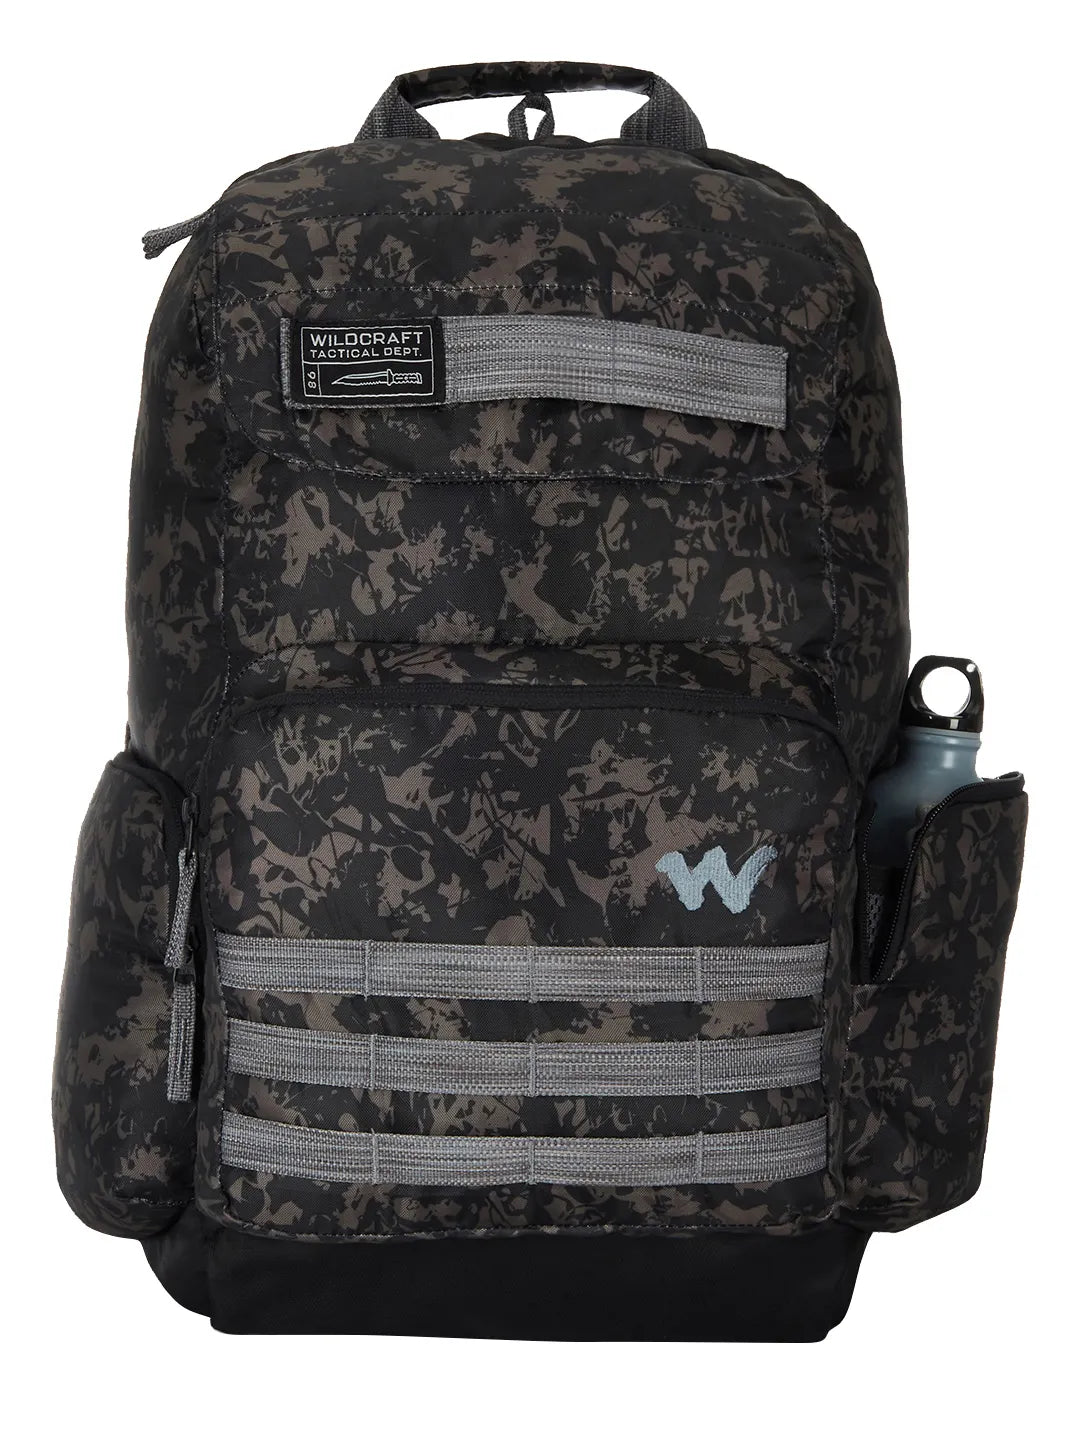 Safara Brown Tactical 4 15 inch Laptop Backpack